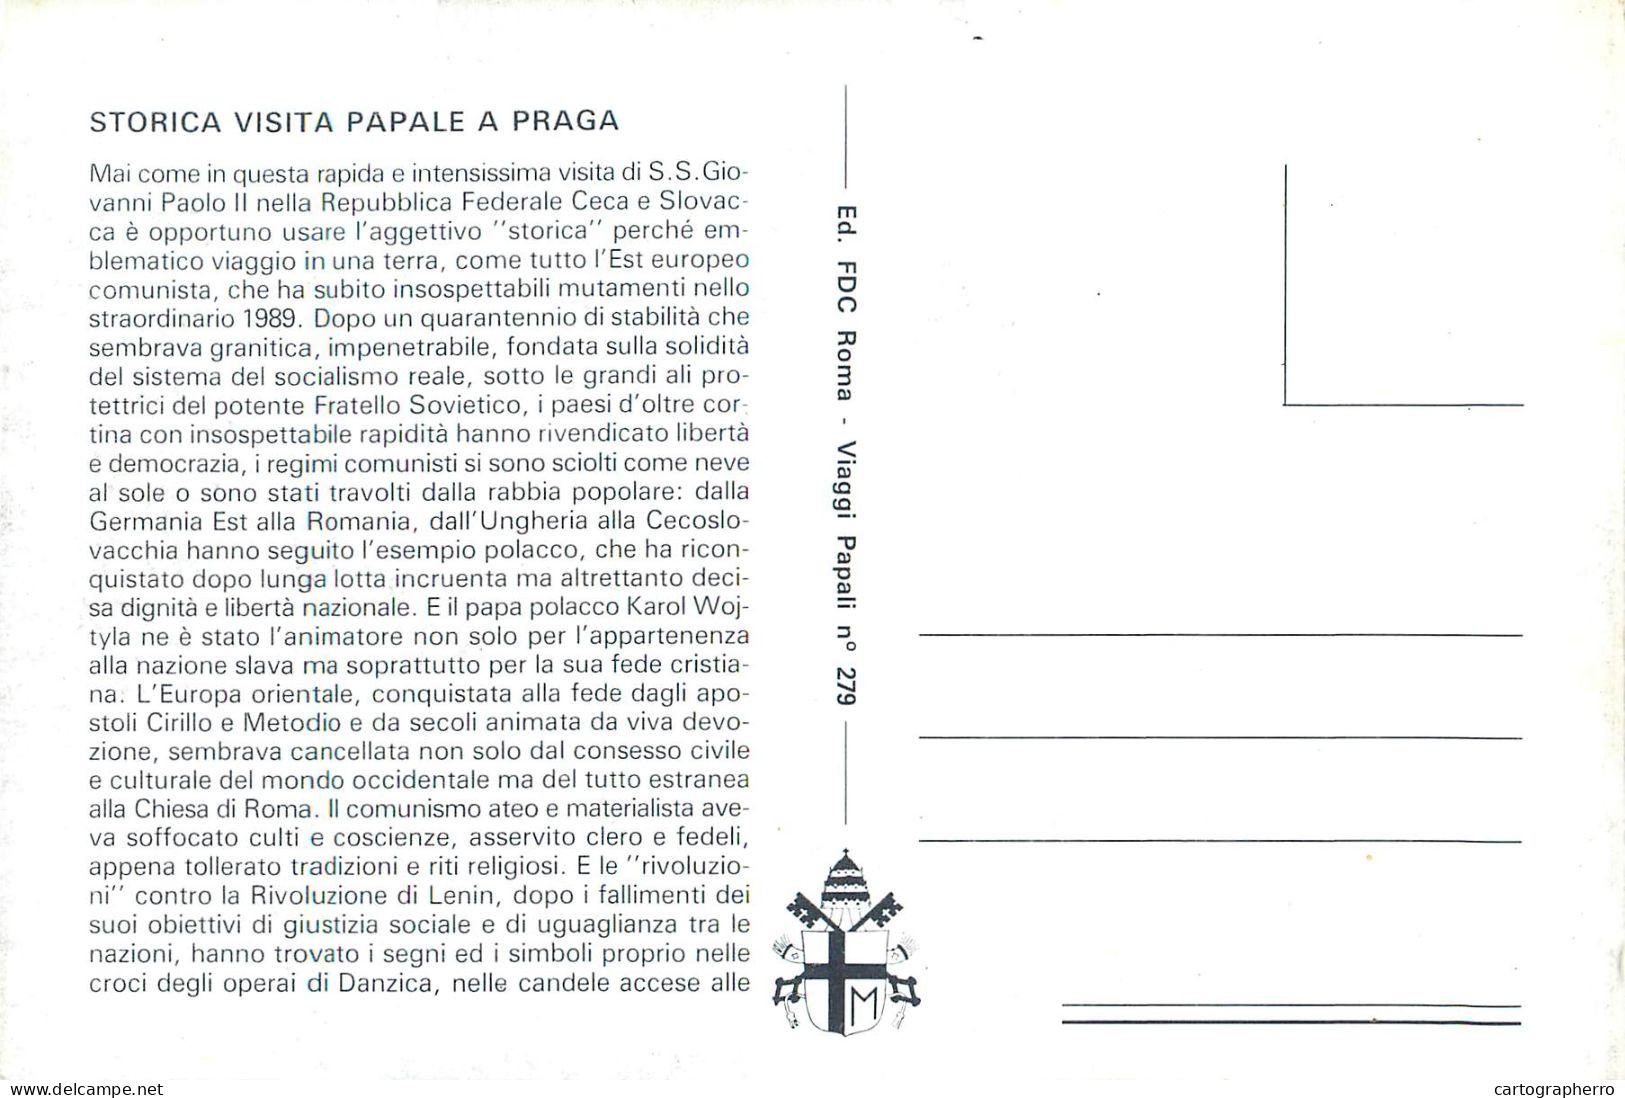 Pope John Paul II Papal Travels Postcard Prague - Popes